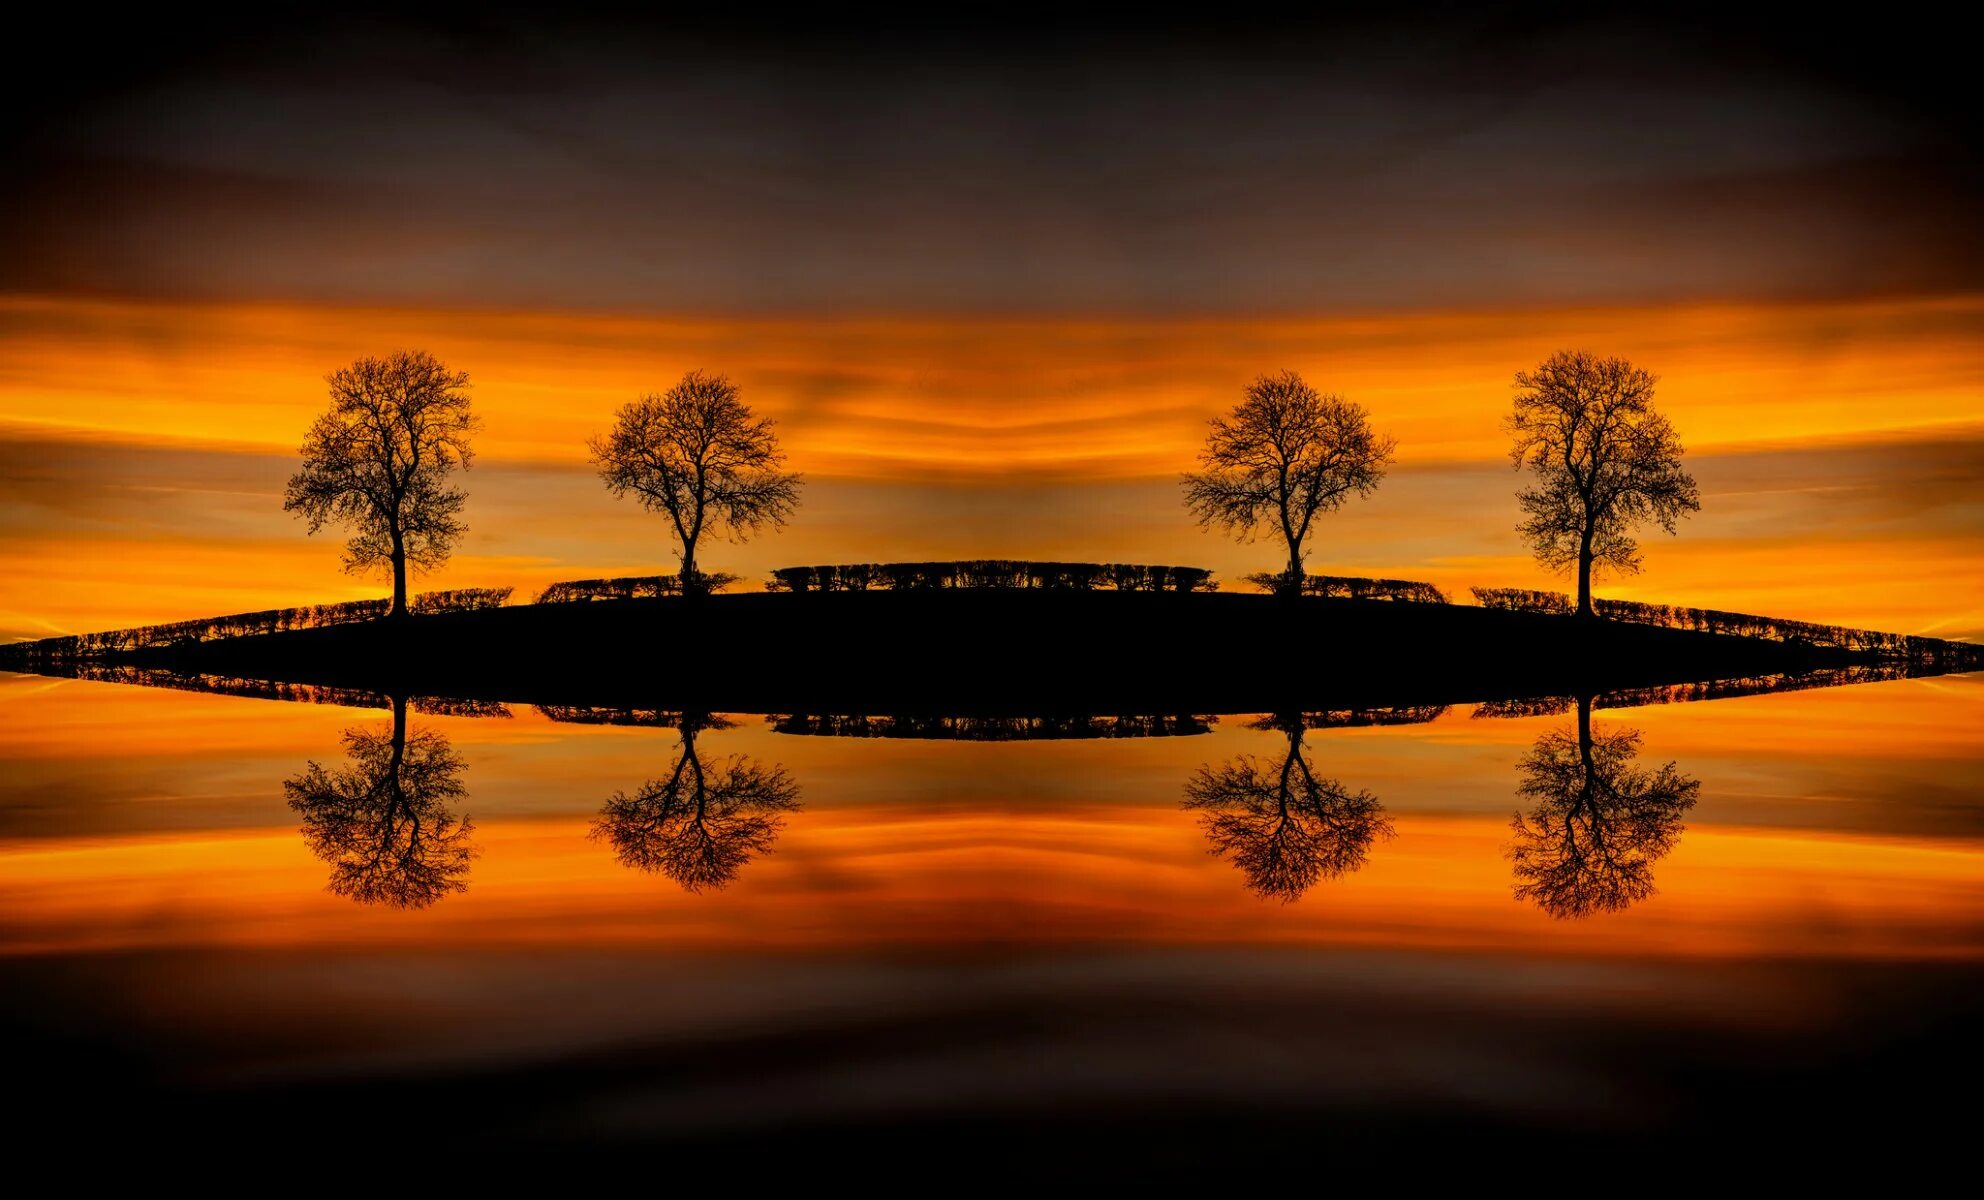 Отражение заката в воде. Отражение деревьев в воде. Дерево на закате. Деревья отражаются в воде.